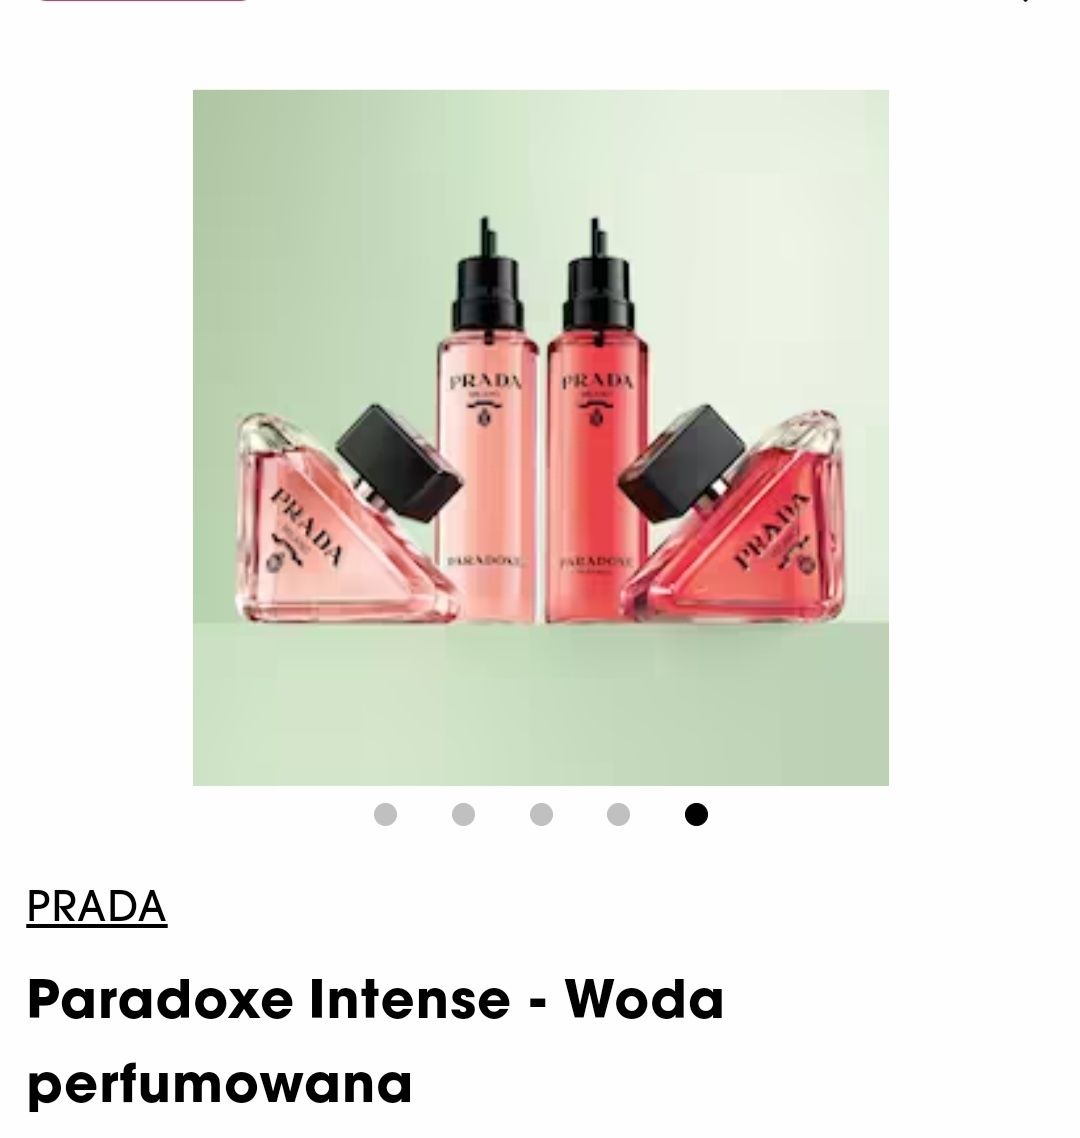 Perfumy zapach Prada Paradoxe Intense 50ml edp